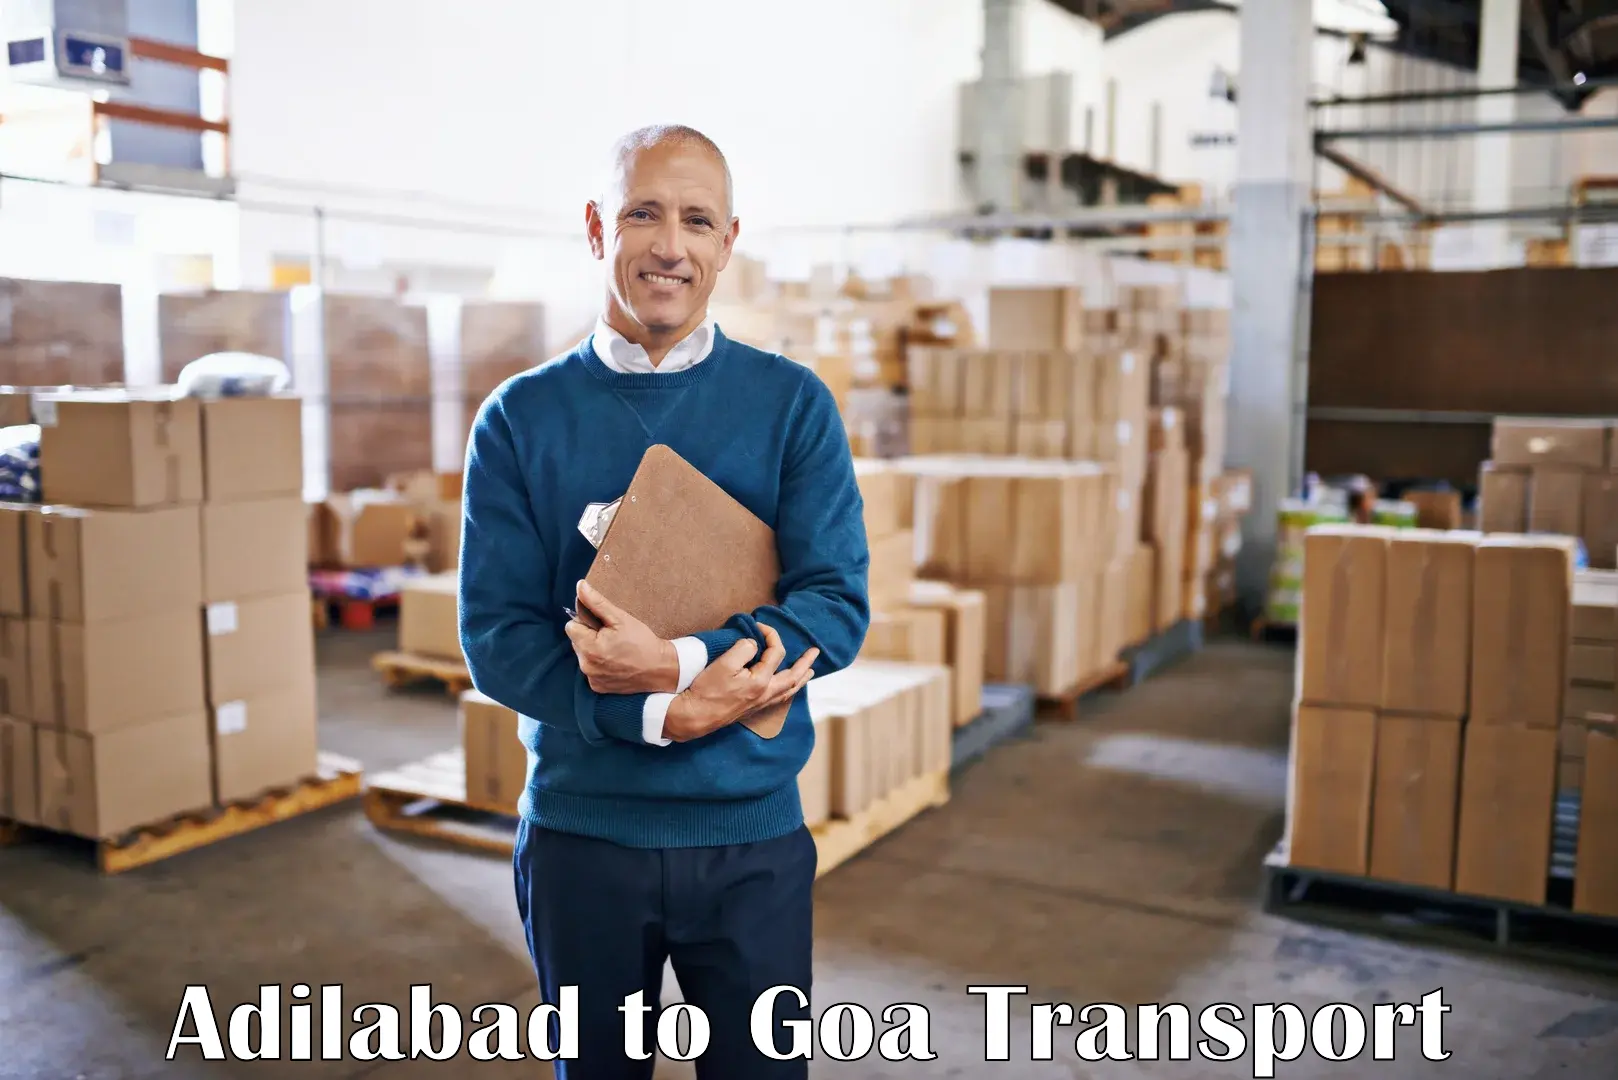 Shipping partner Adilabad to Goa